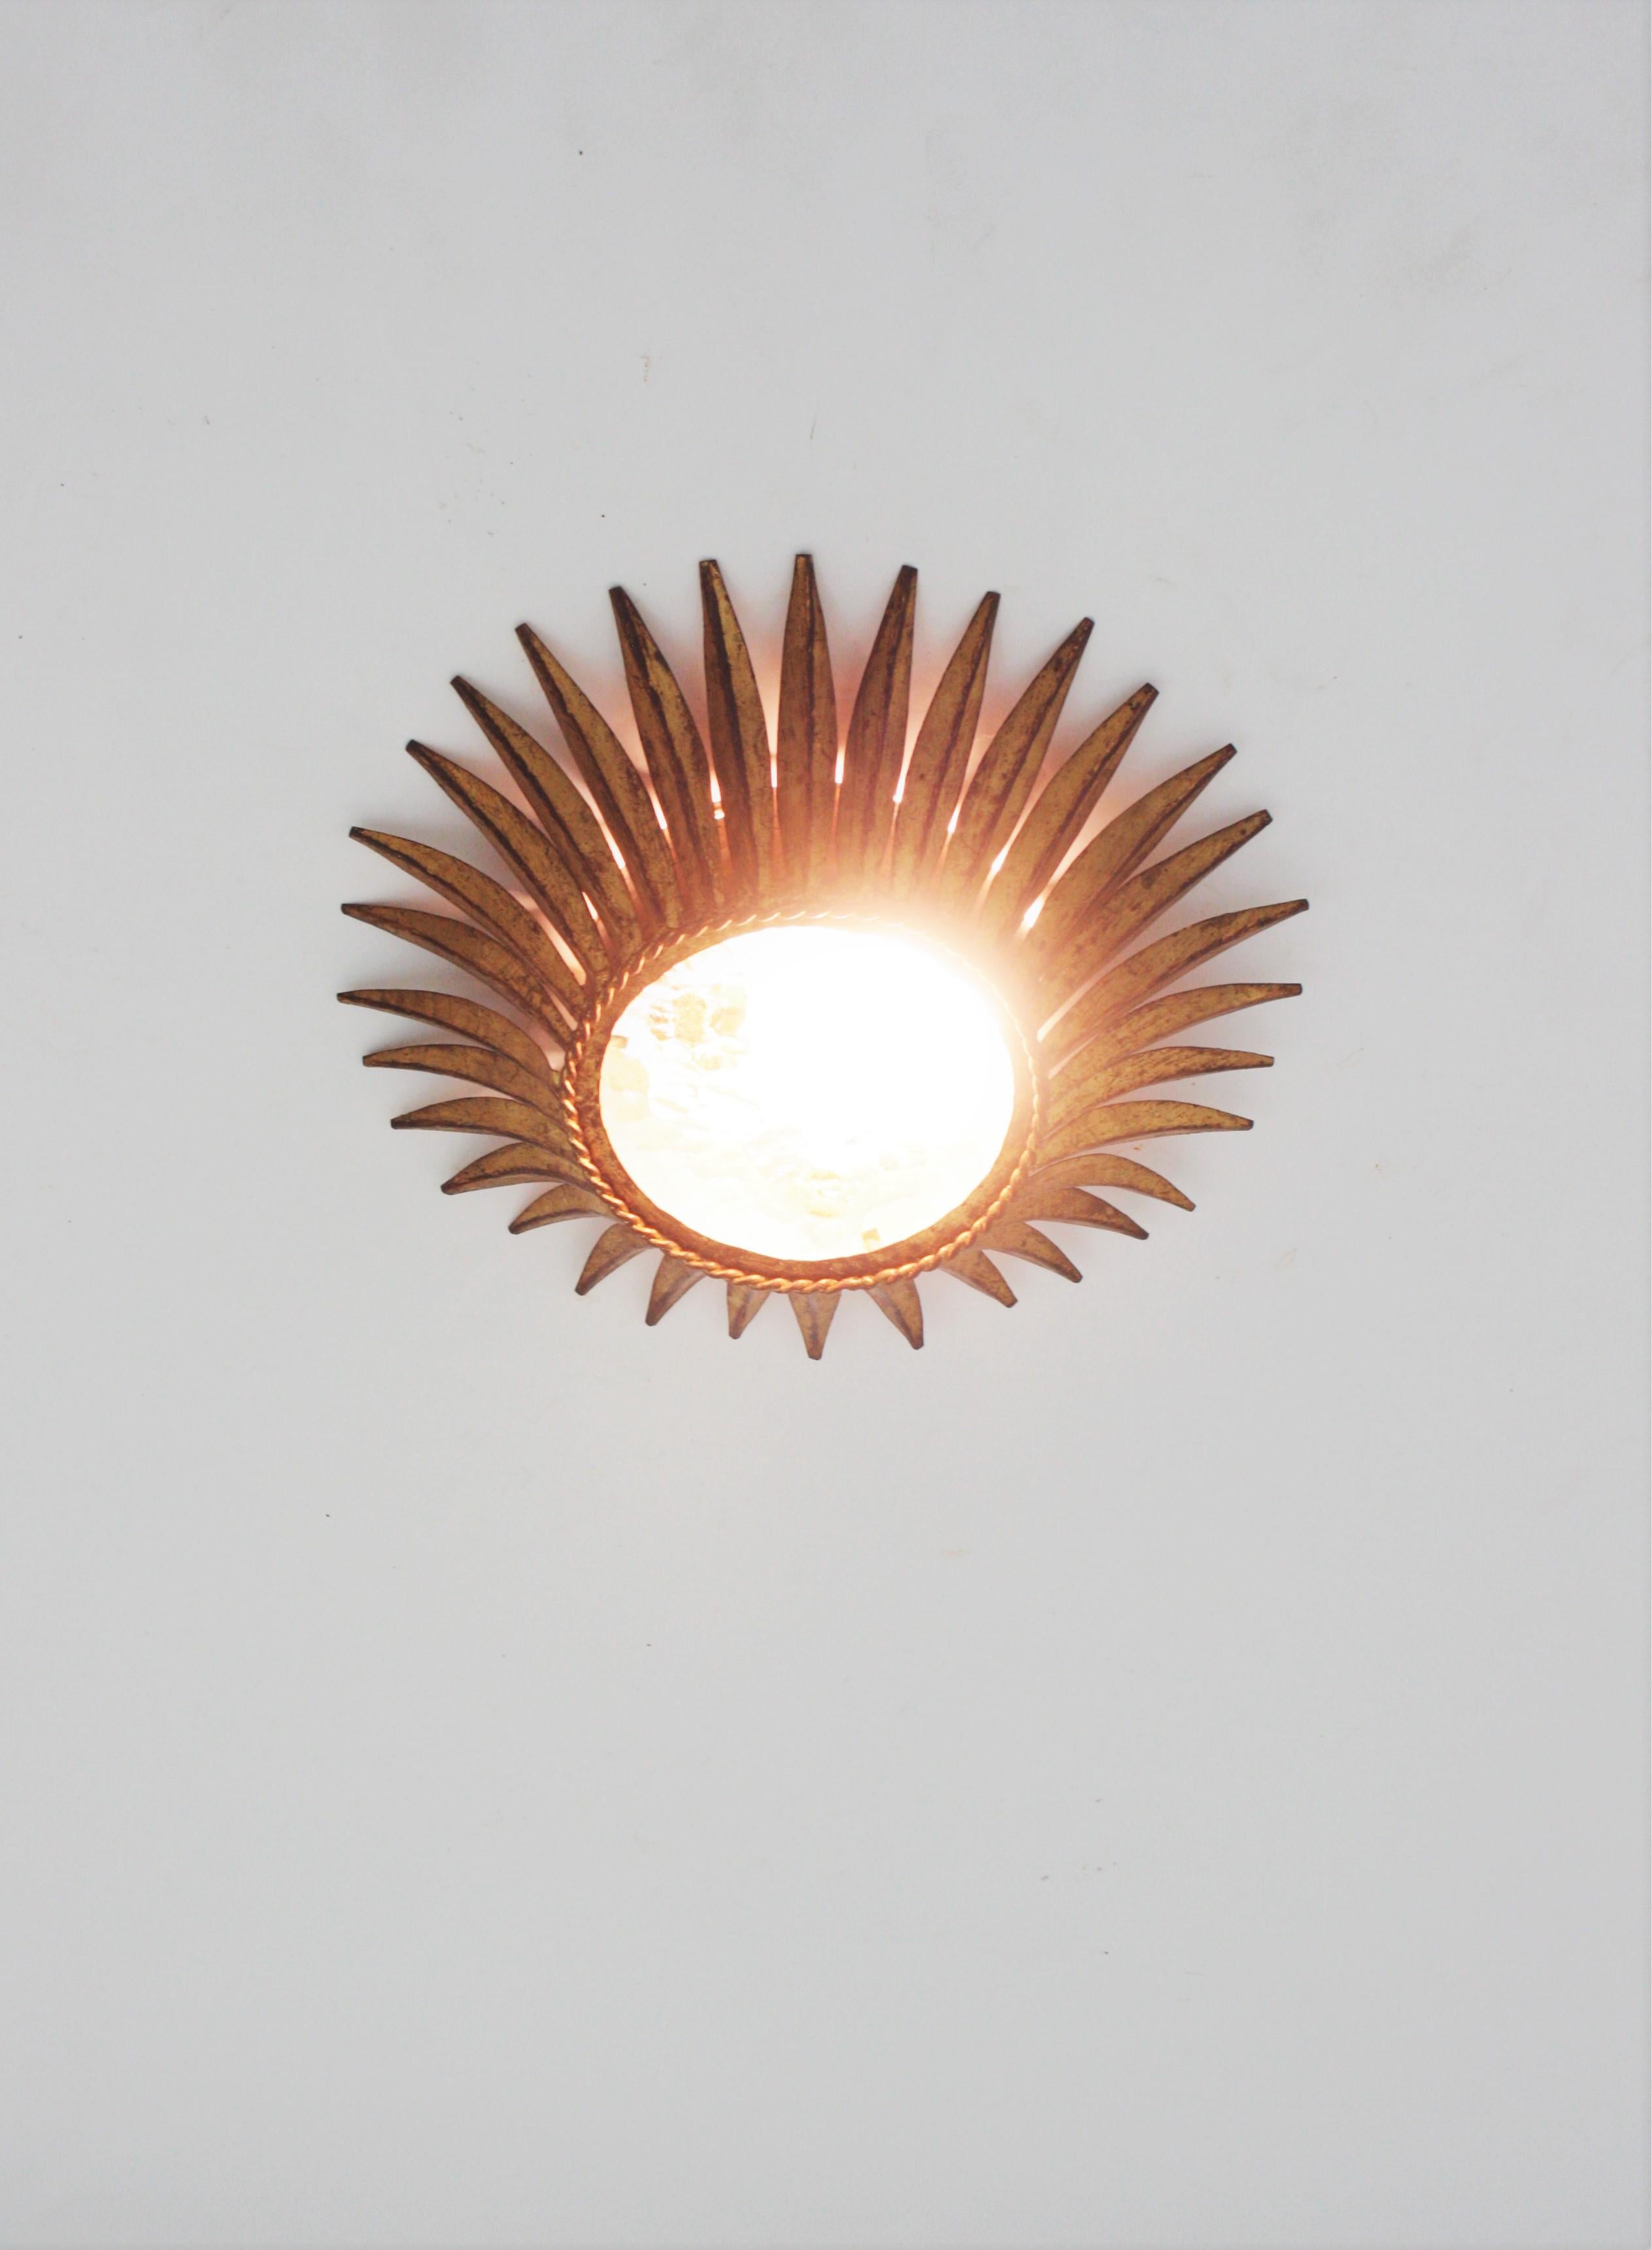 Spanish Sunburst Crown Ceiling Light Fixture, Gilt Iron and Textured Glass For Sale 4